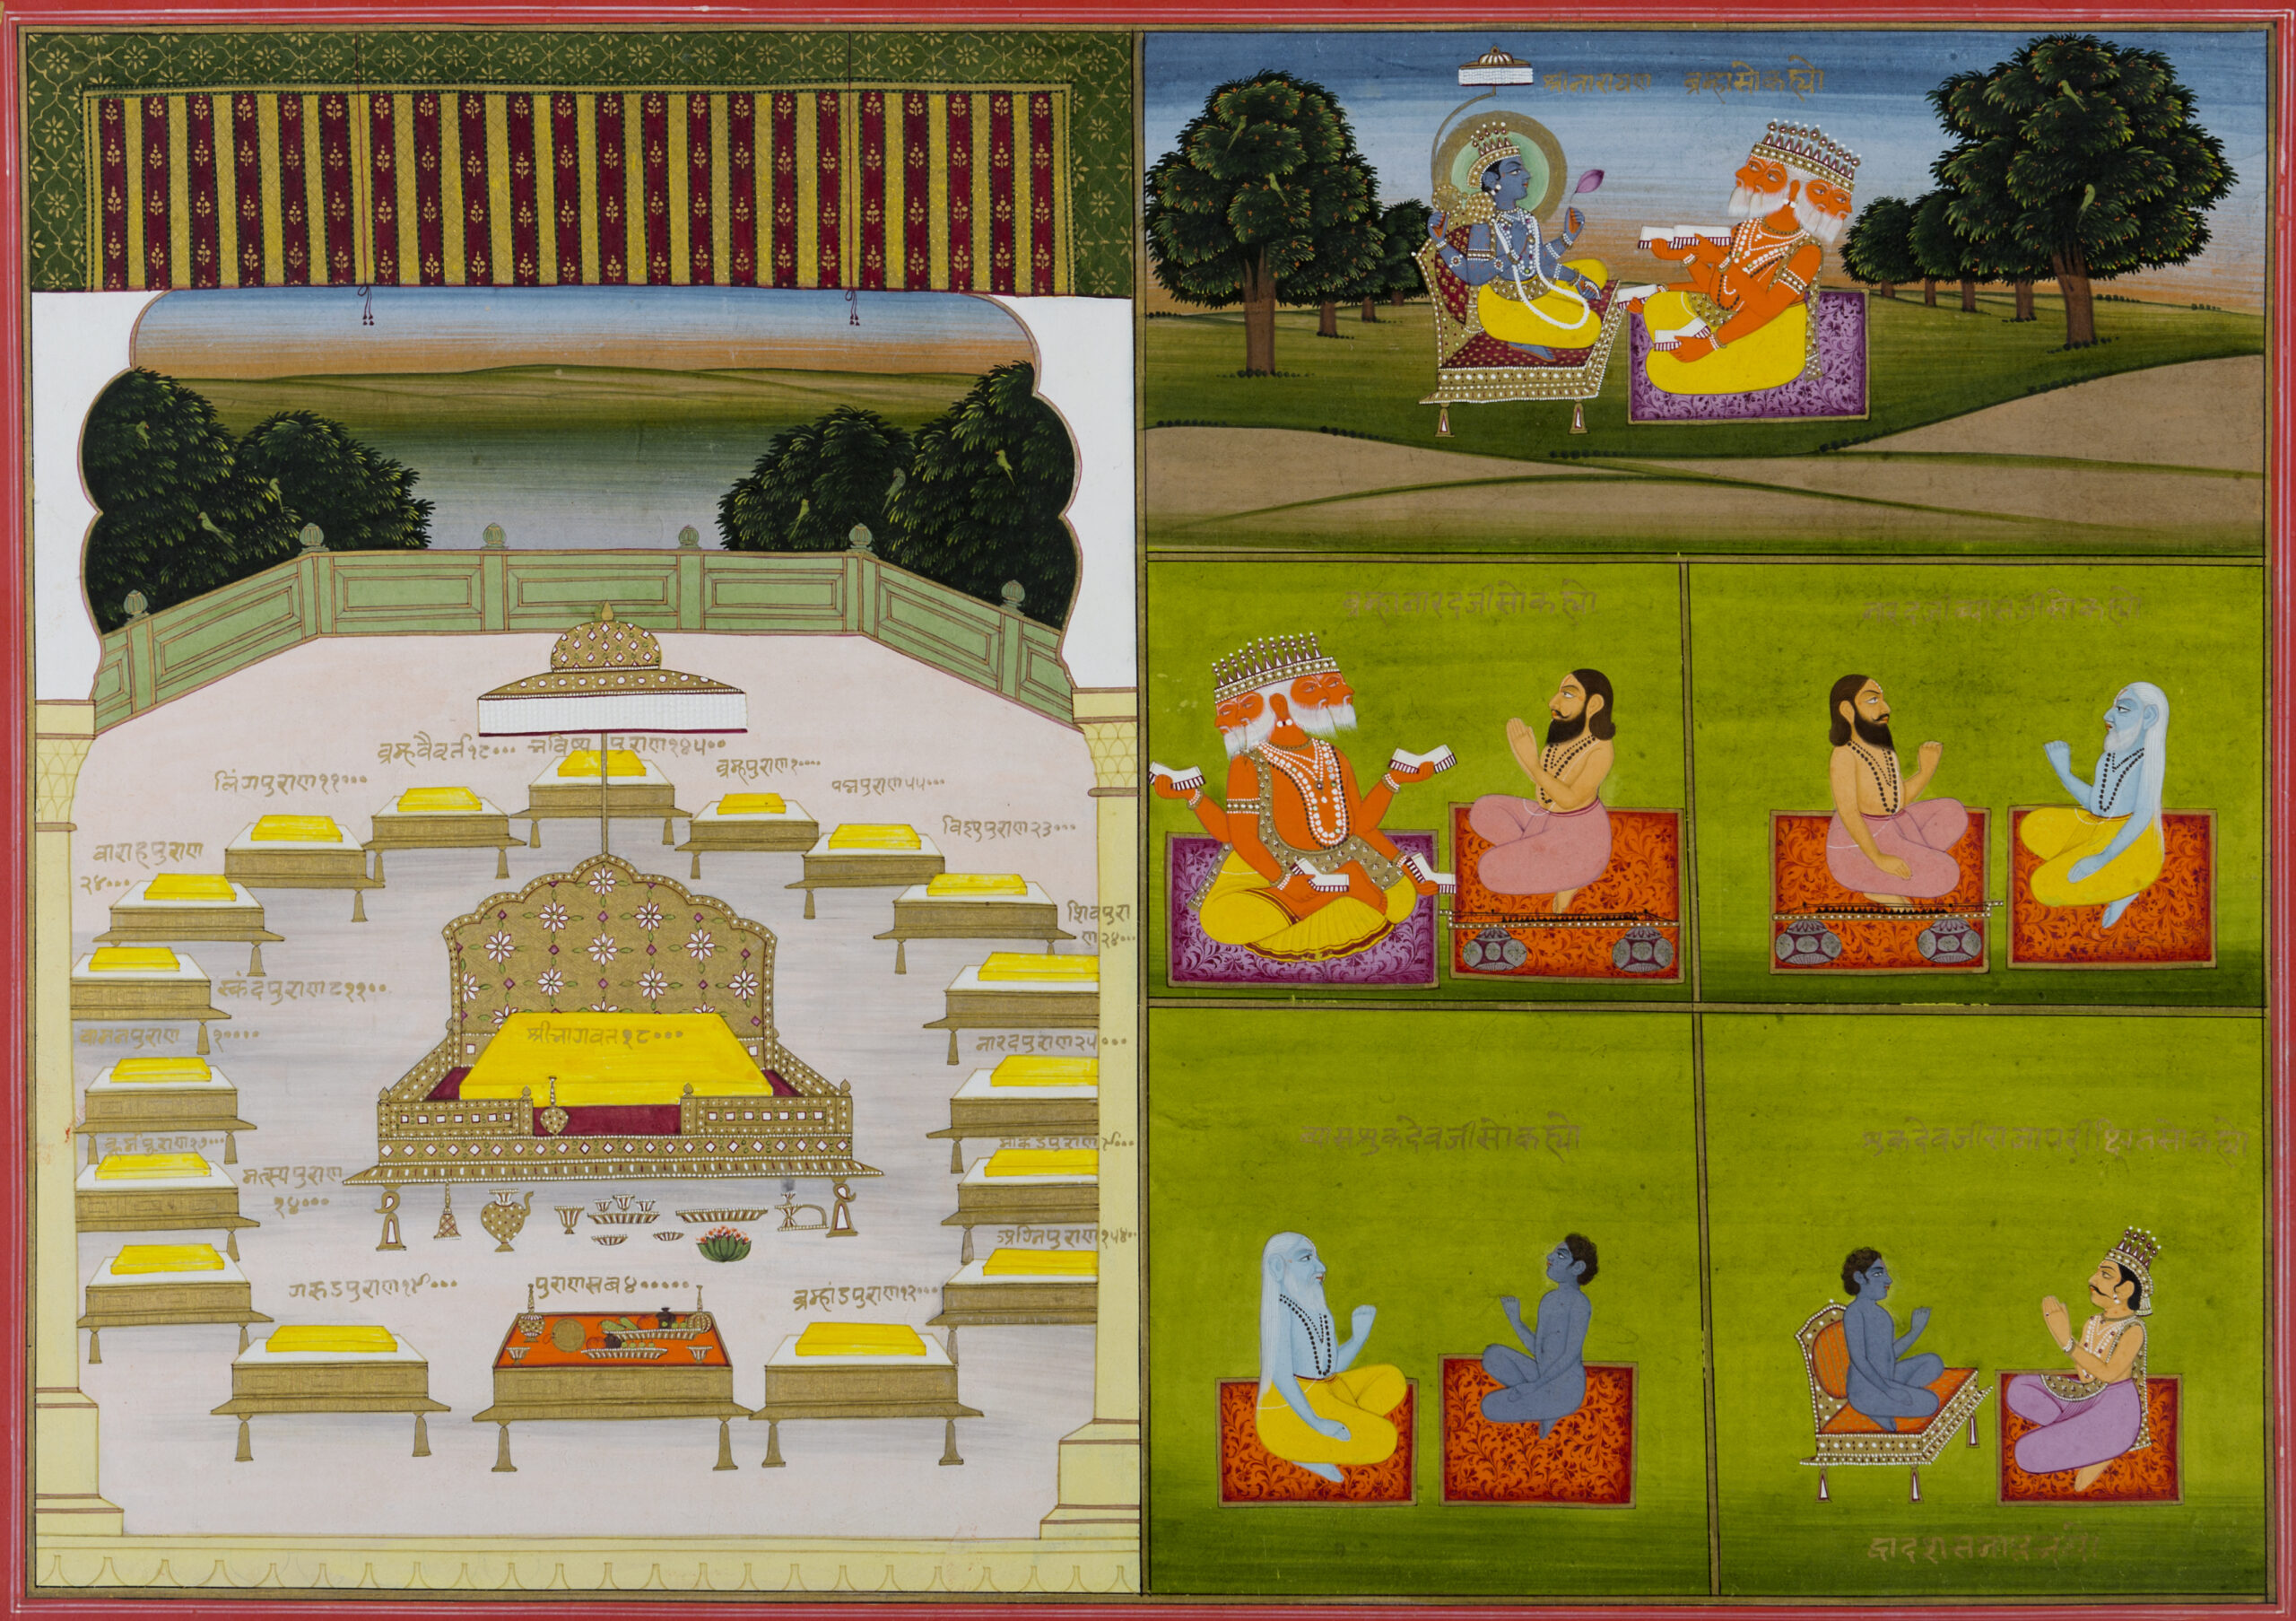 An Illustration of the Bhagavata Purana